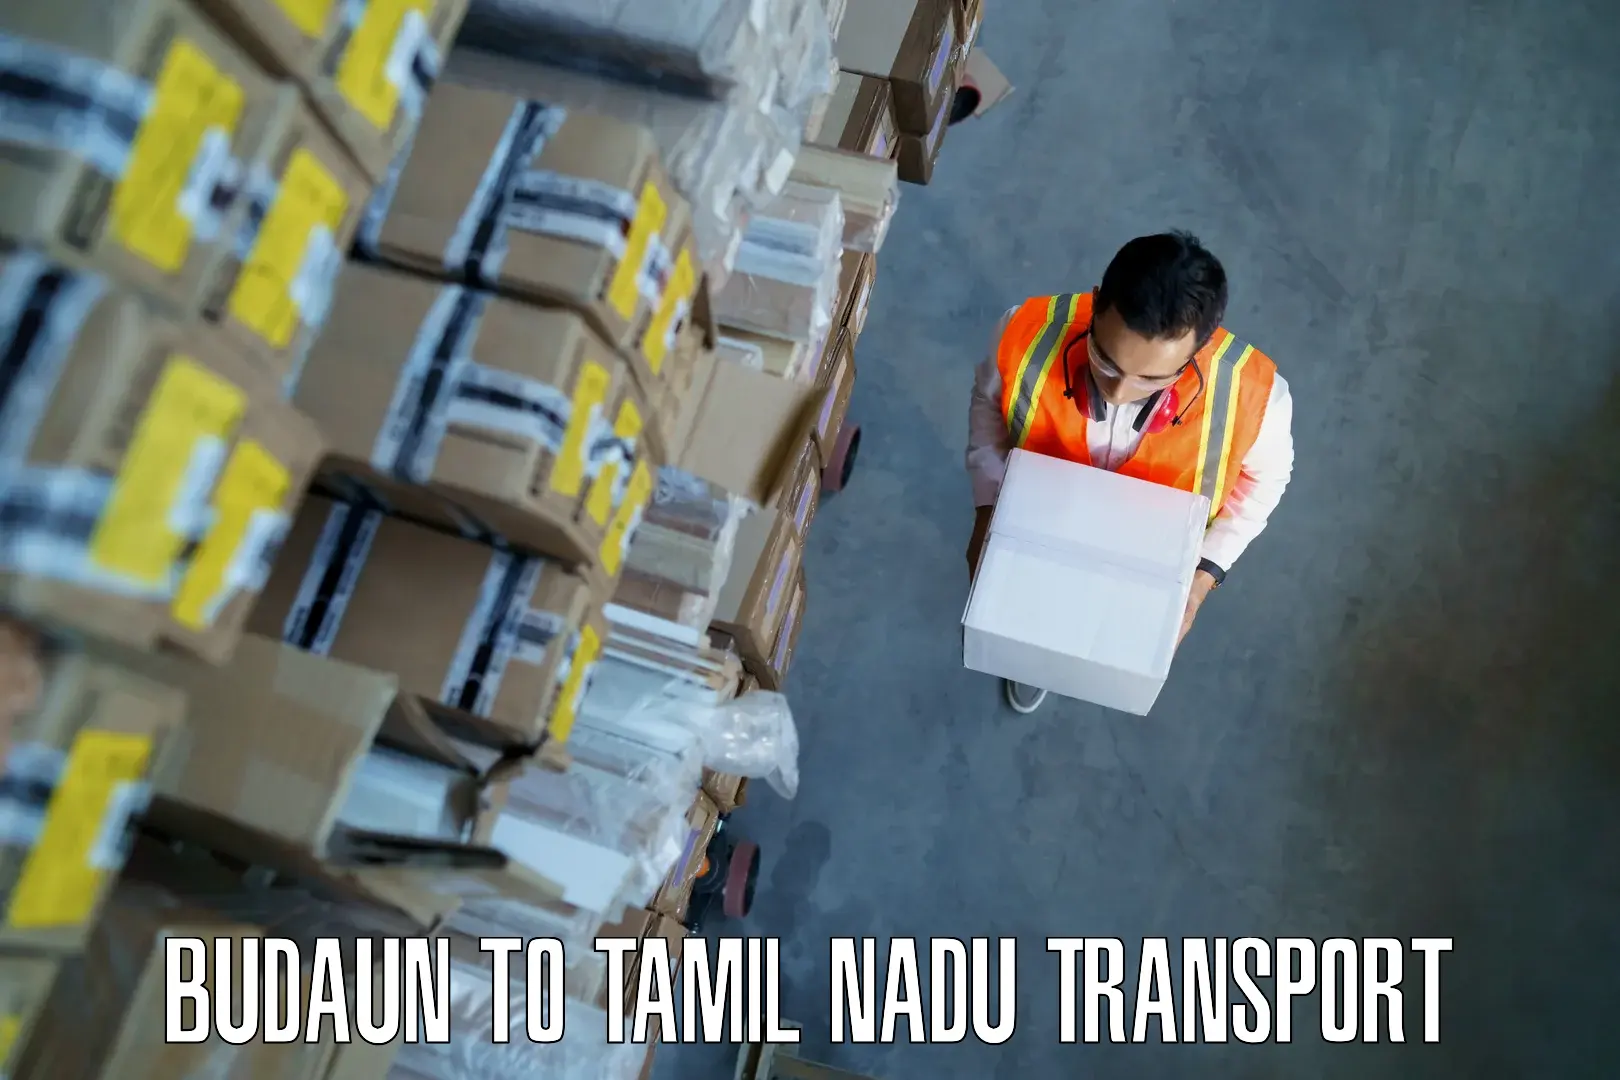 Delivery service Budaun to Tamil Nadu